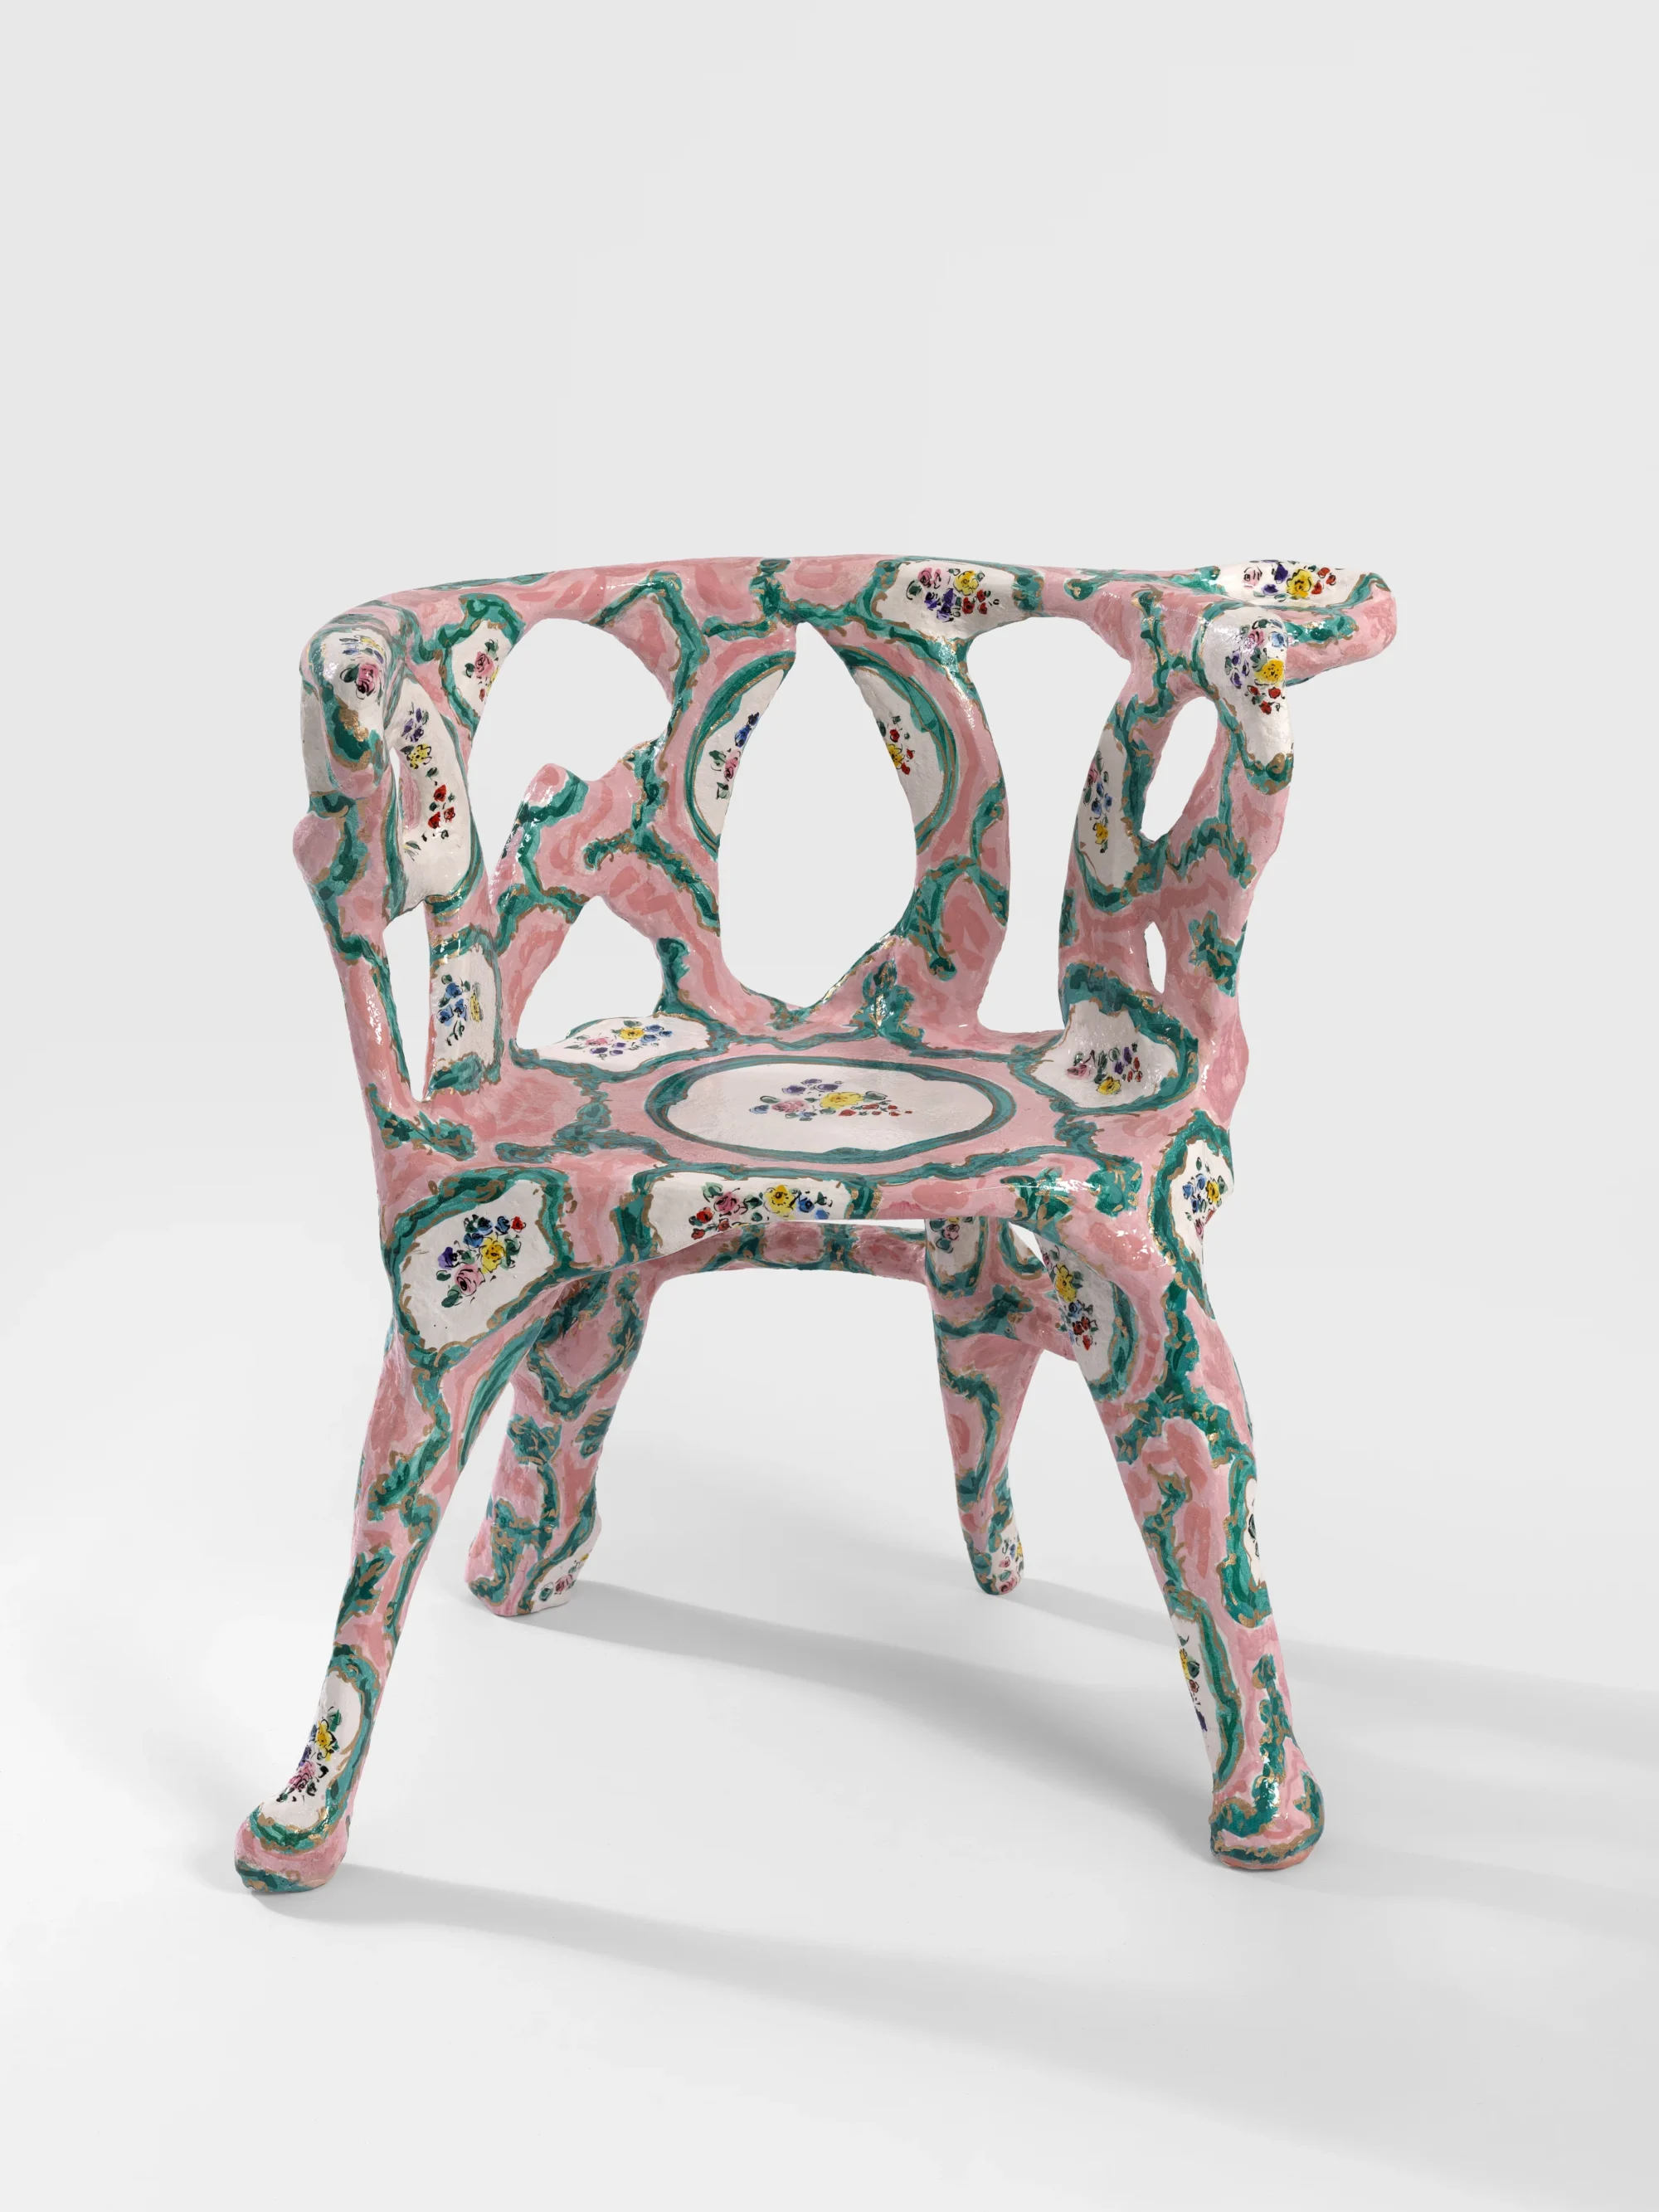 The Wick - Pink Sèvres Chair, 2023
acrylic, wood, paper pulp and automotive clear coat
81.3 x 76.2 x 50.8 cm, 32 x 30 x 20 in
© Francesca DiMattio, 2023
Photo: Karen Pearson